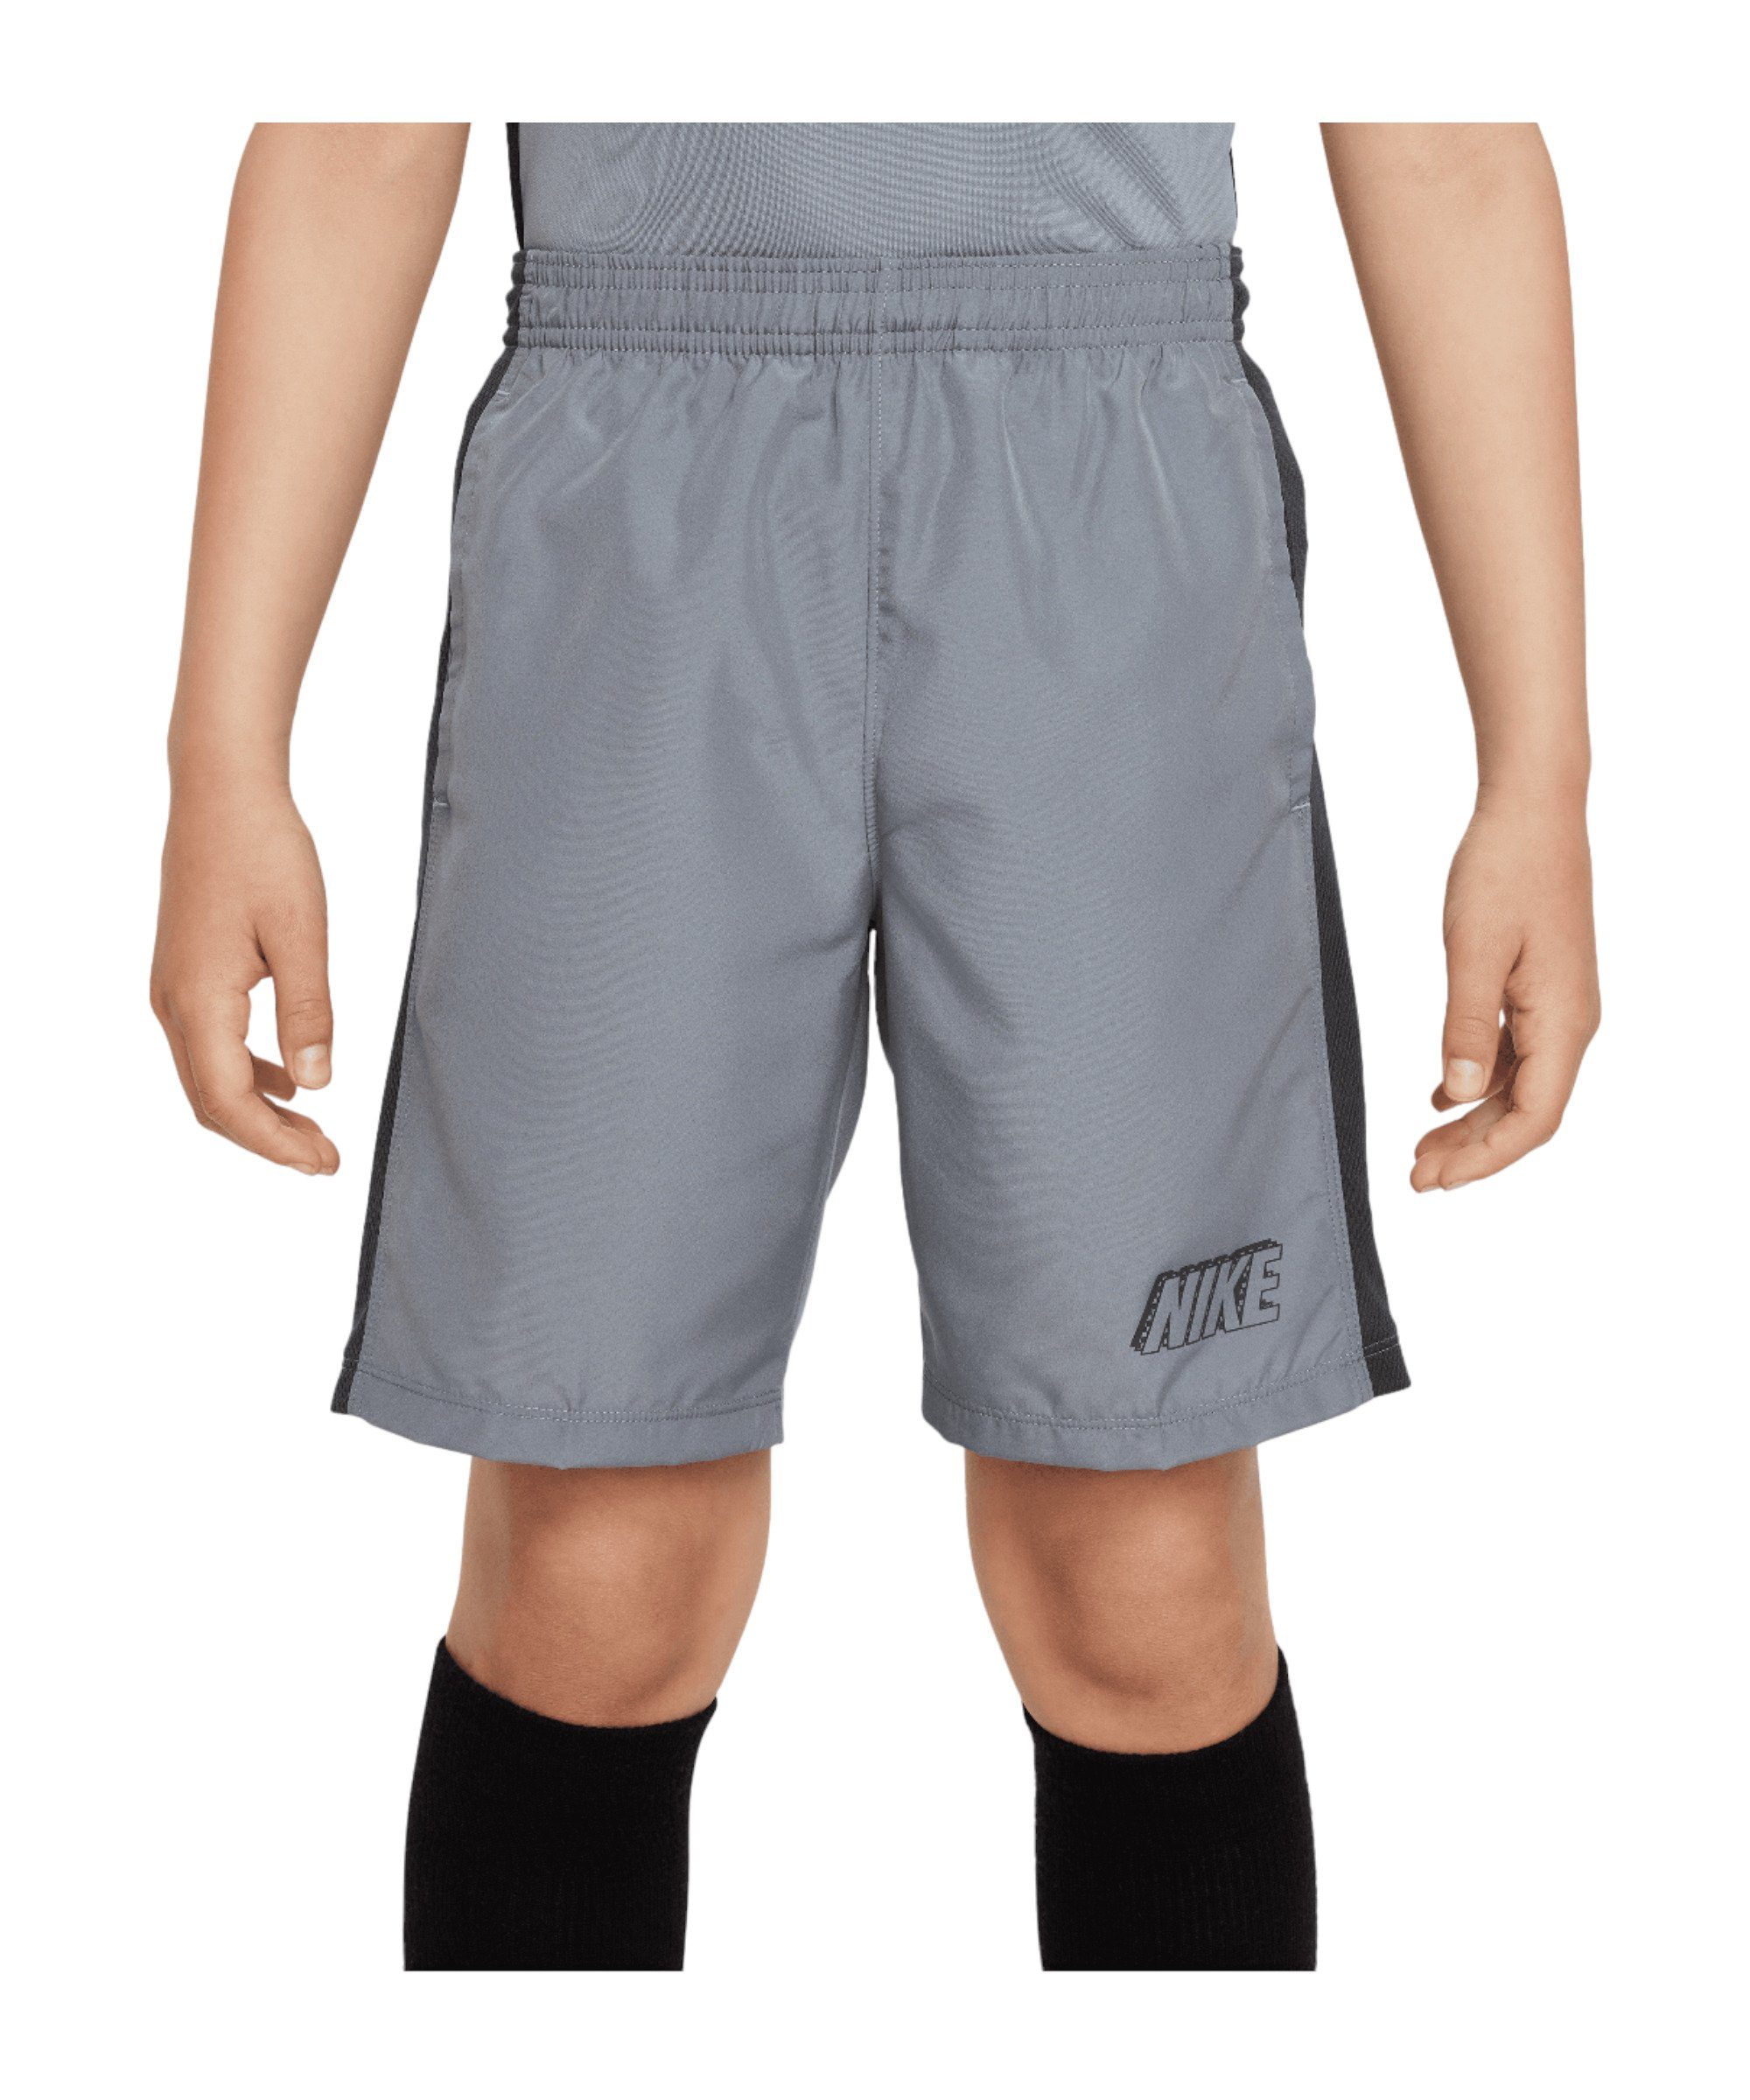 Nike Sporthose Academy graugraugrau Shorts Kids 23